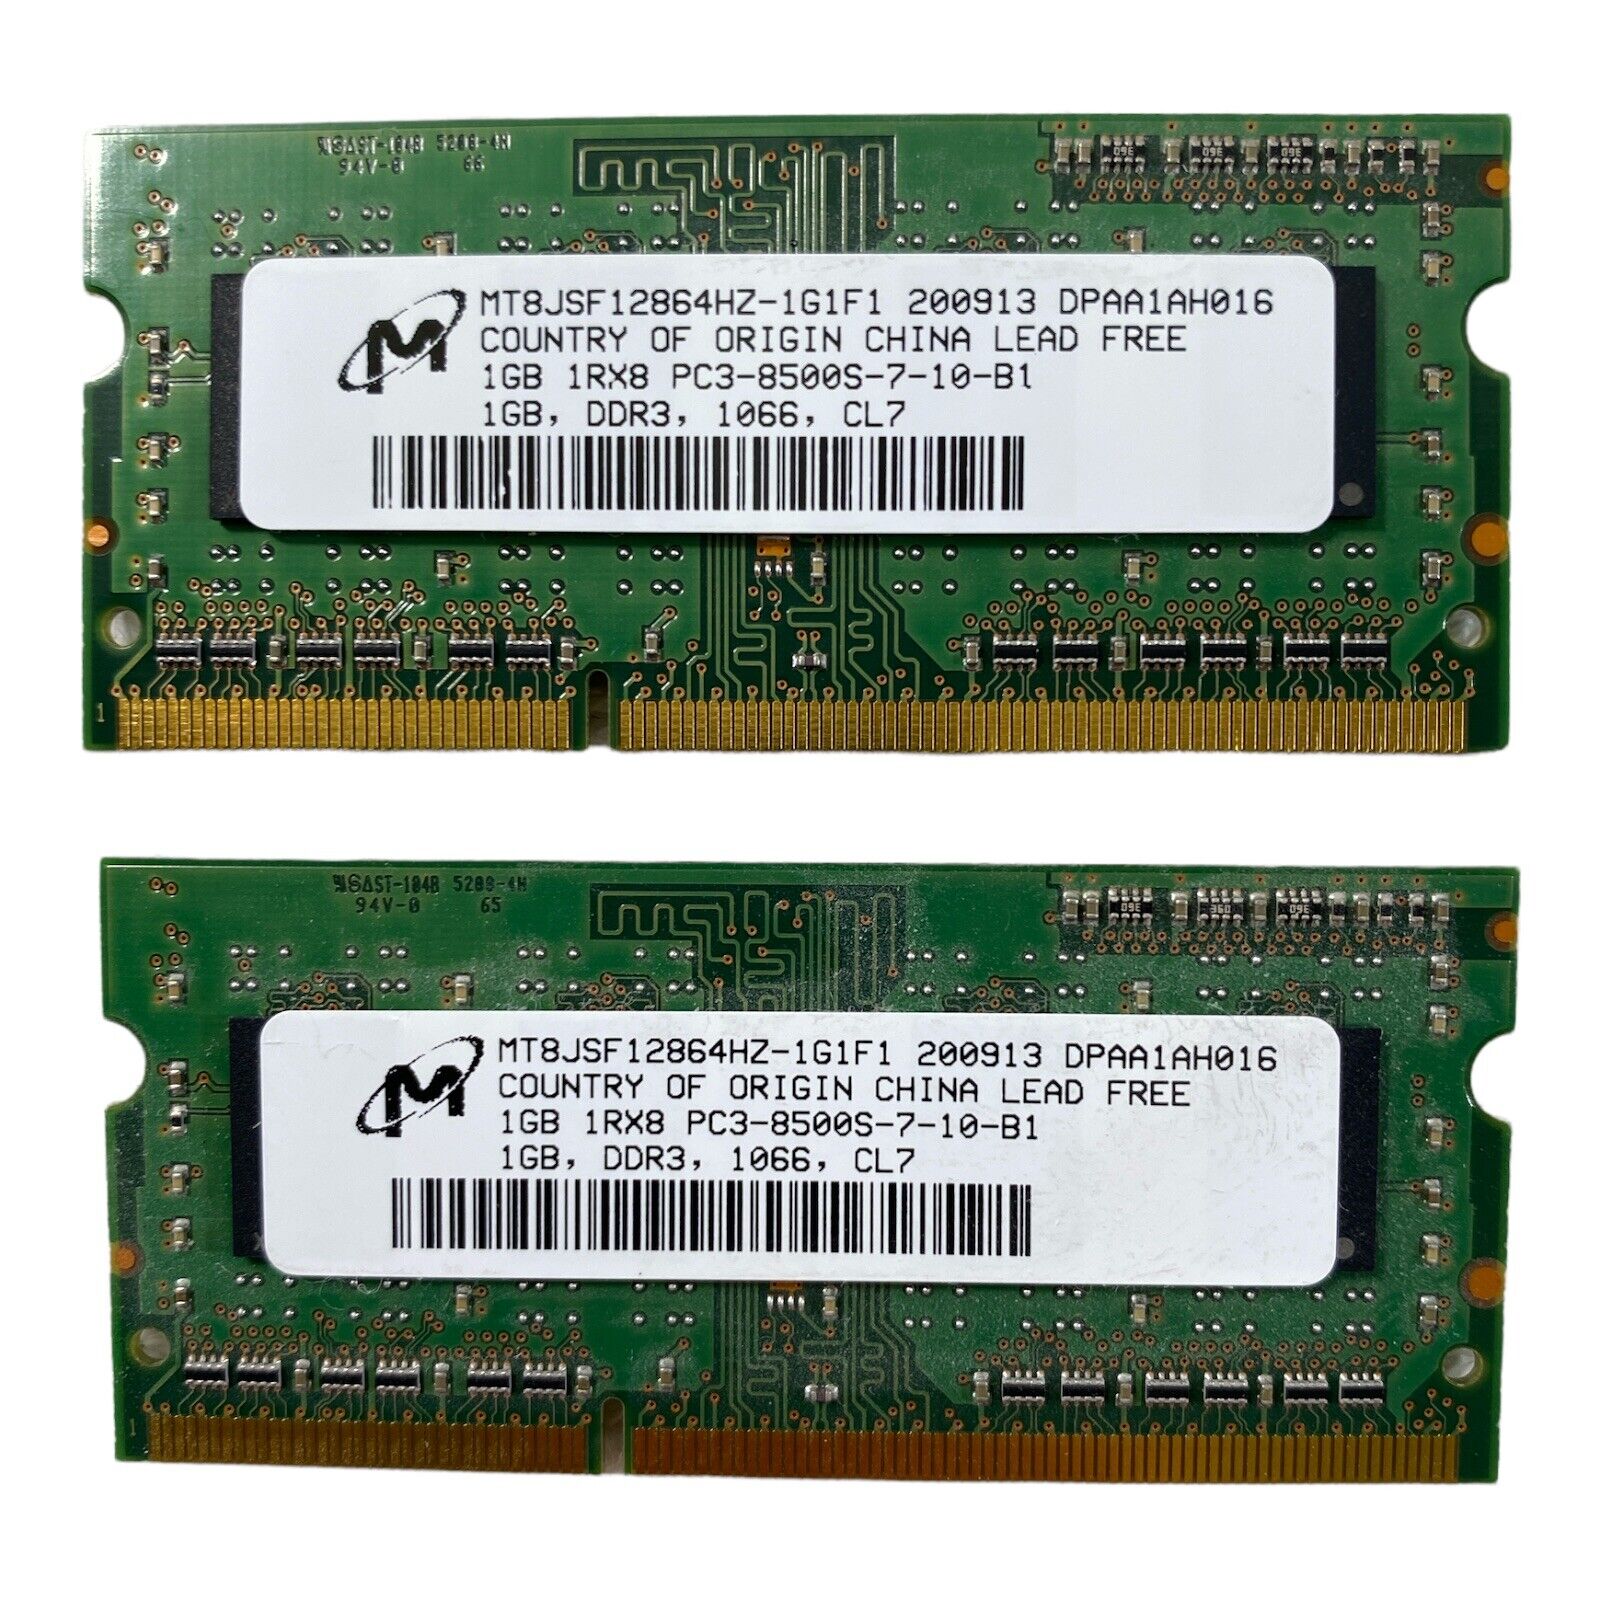 Micron 2GB RAM Kit 2x1GB DDR3 Laptop Memory MT8JSF12864HZ-1G1D1